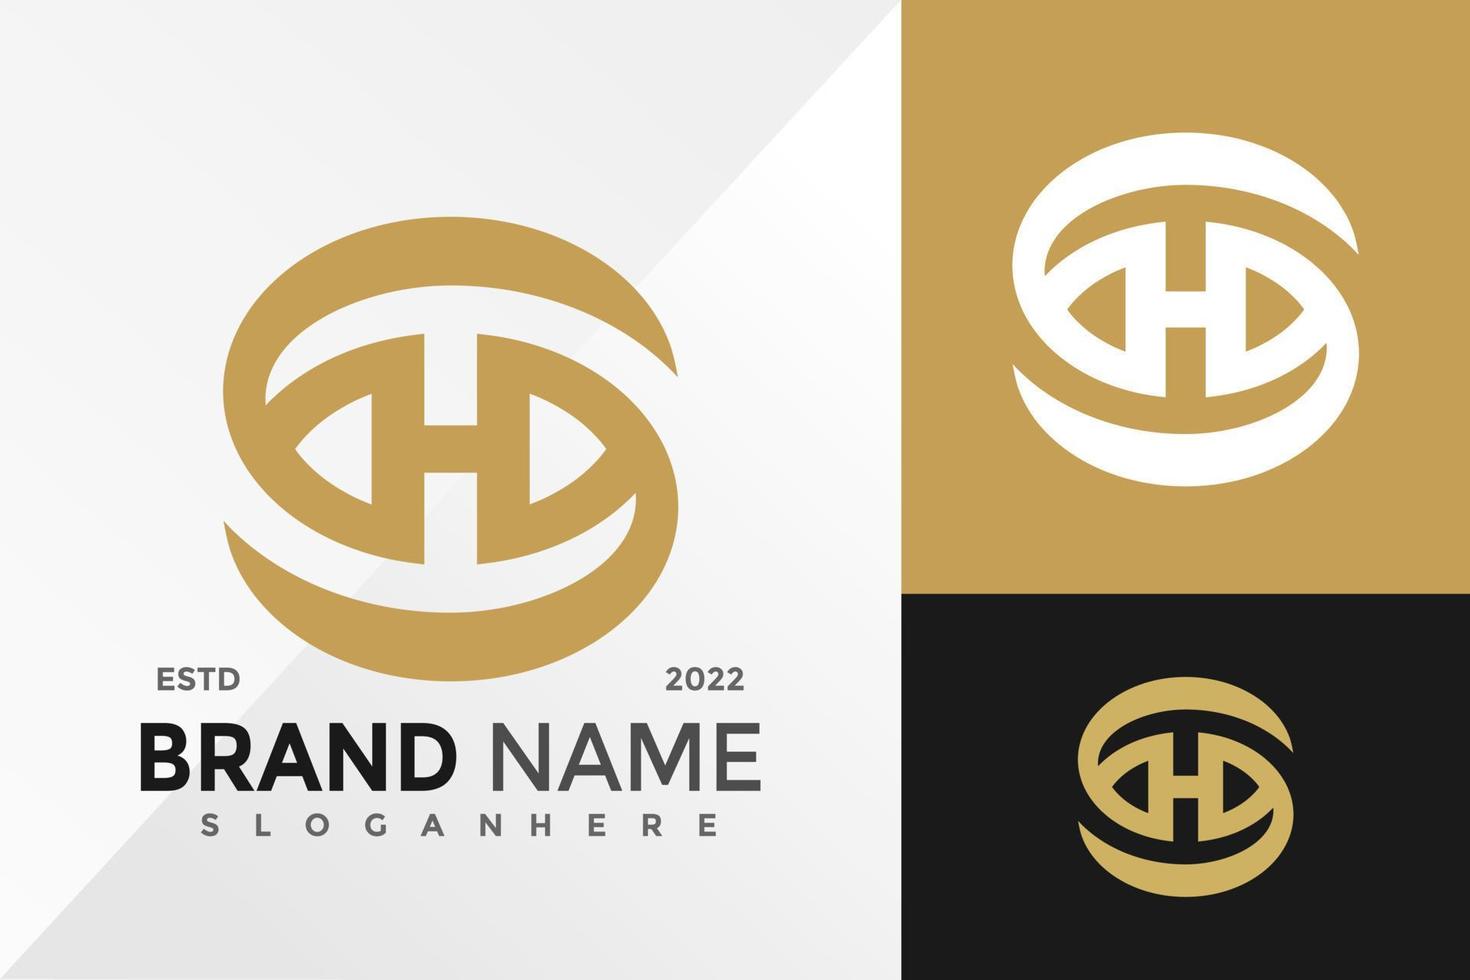 Letter SH or HS Circle Company Logo Design Vector illustration template